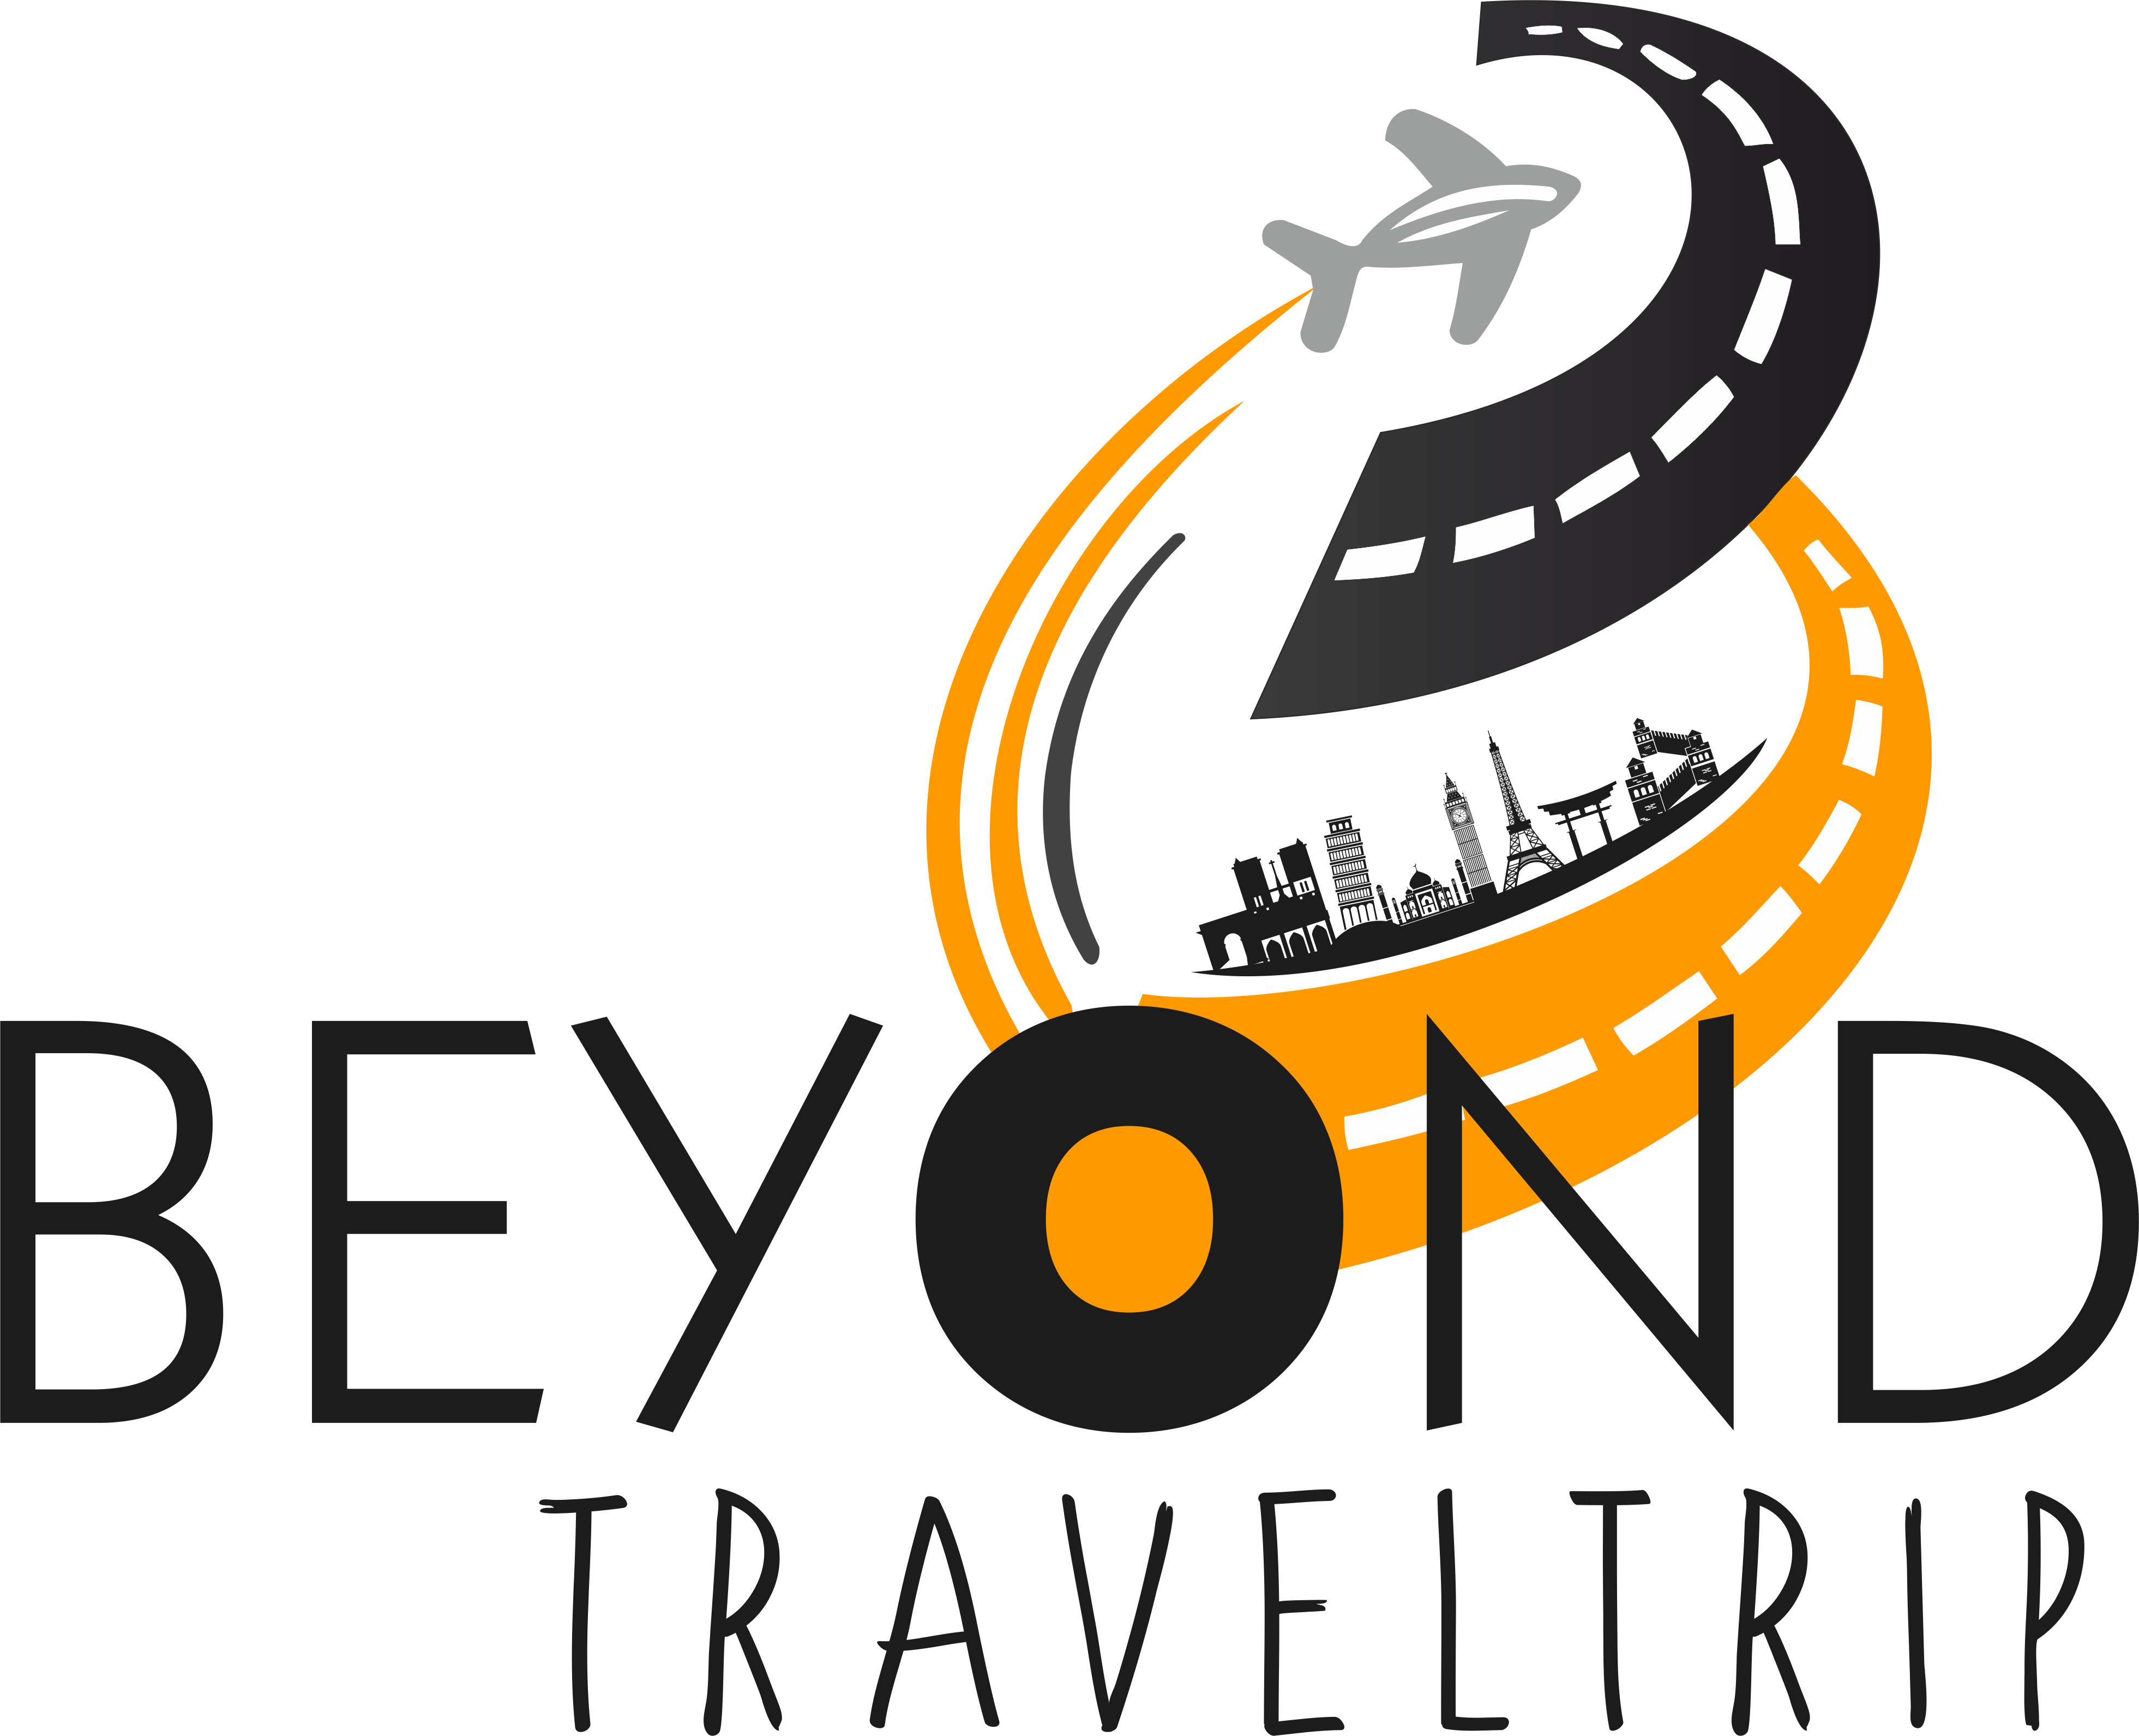 Beyond Traveltrip